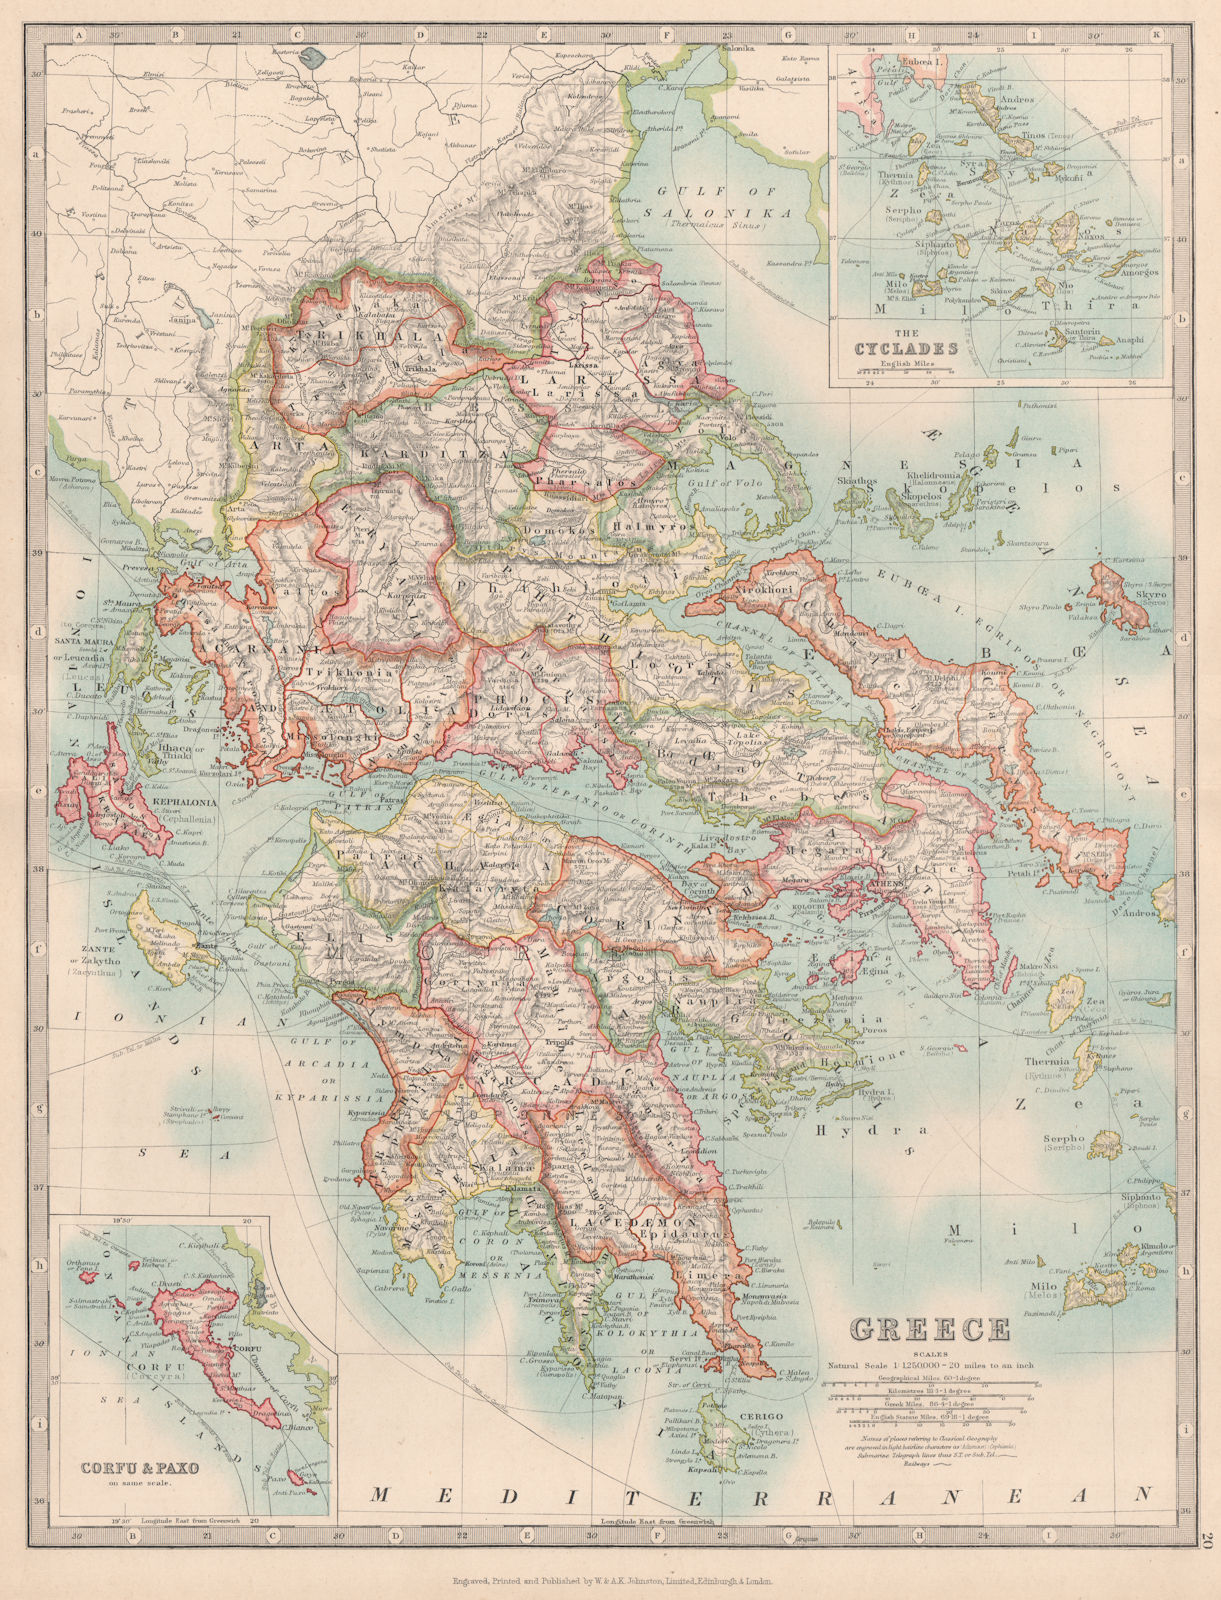 GREECE. Inset Corfu Paxo Cyclades. Railways. JOHNSTON 1912 old antique map